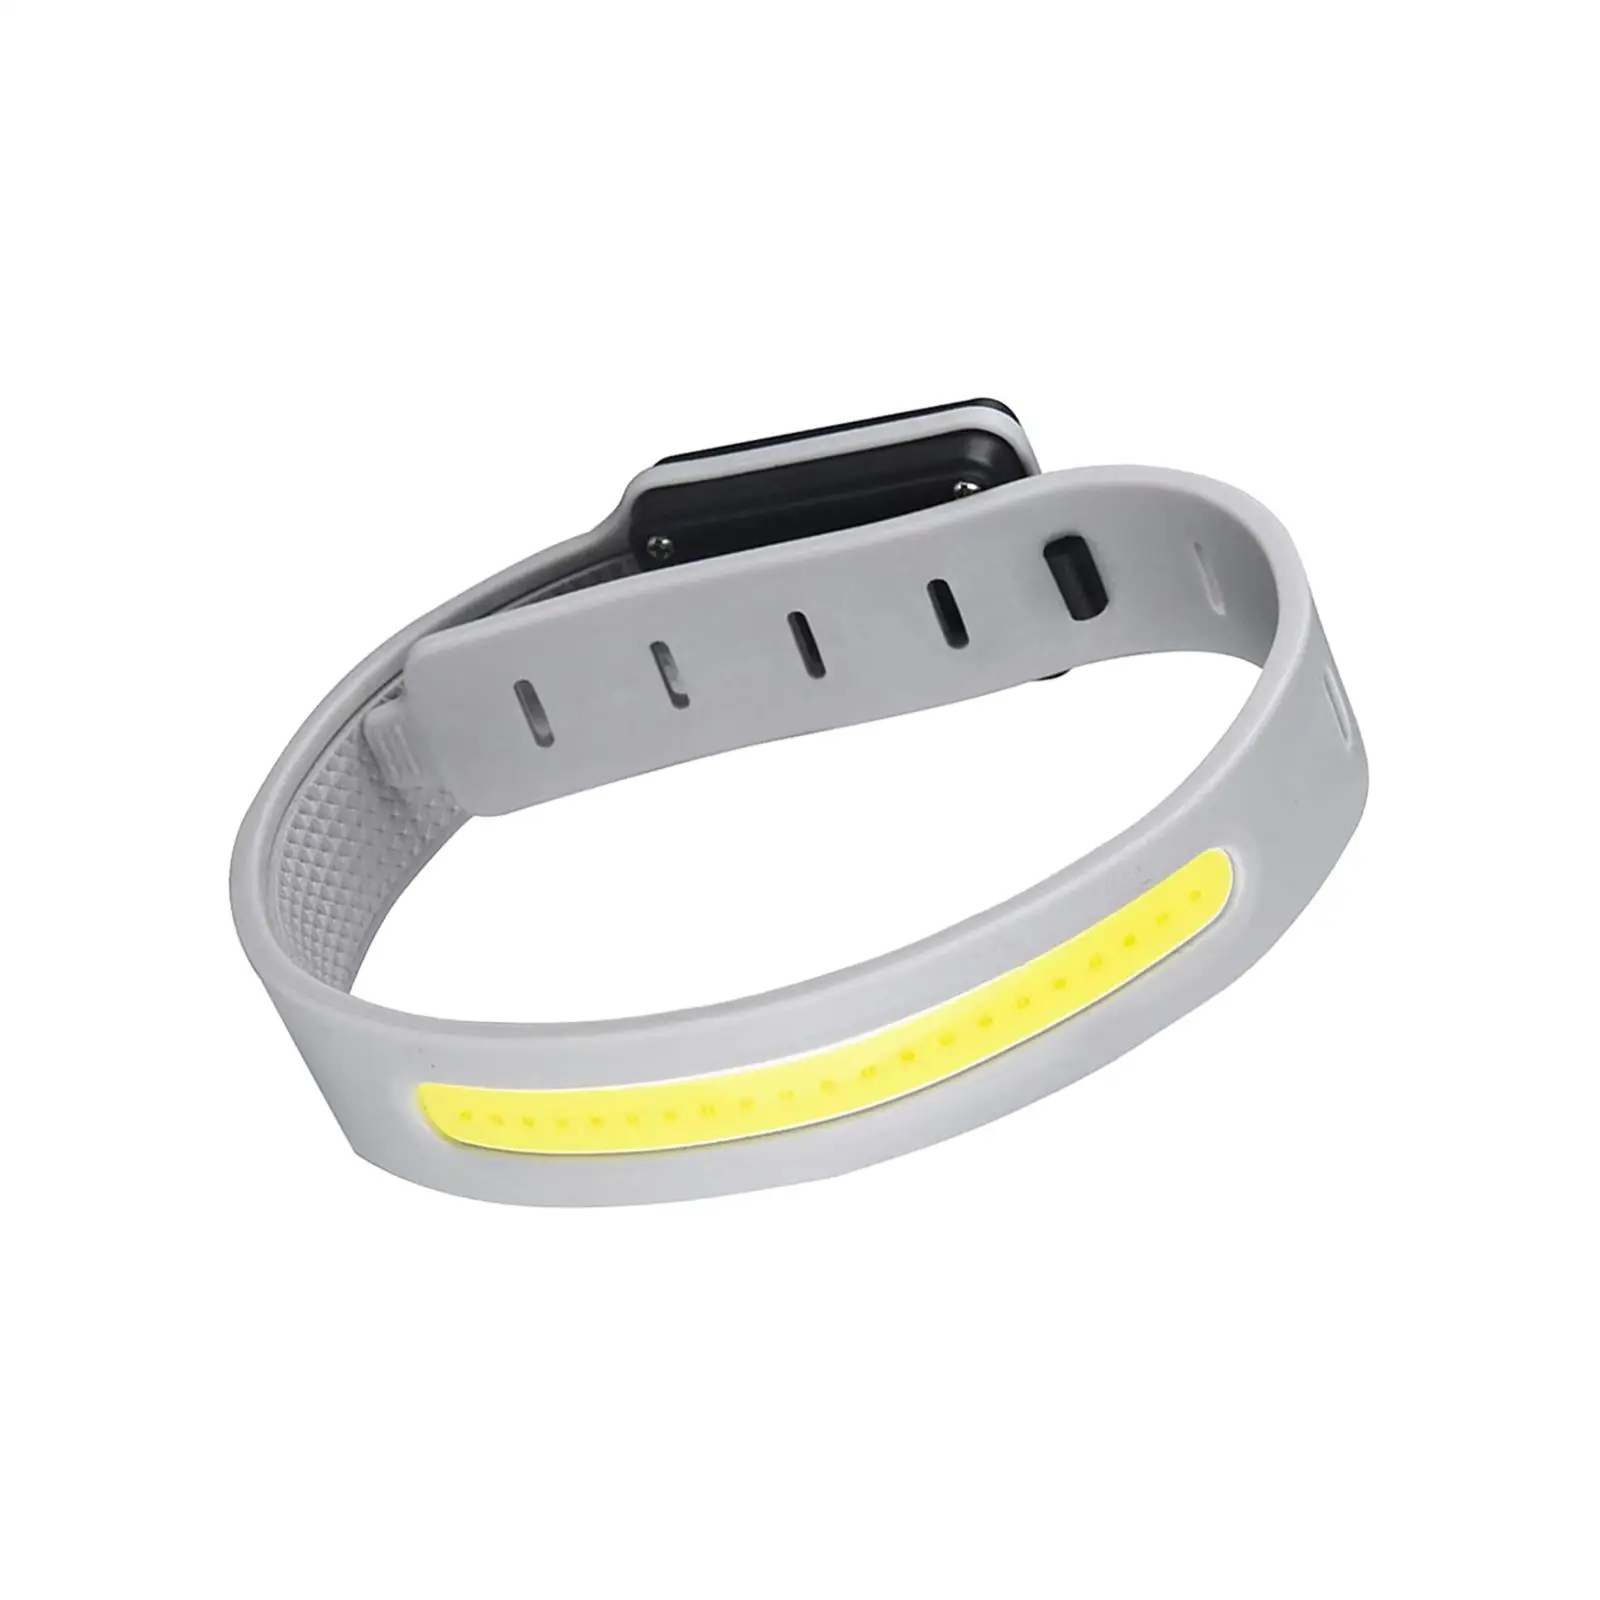 LED Safety Armband Sports Wristband Belt Strap Waterproof Light up Bracelet LED